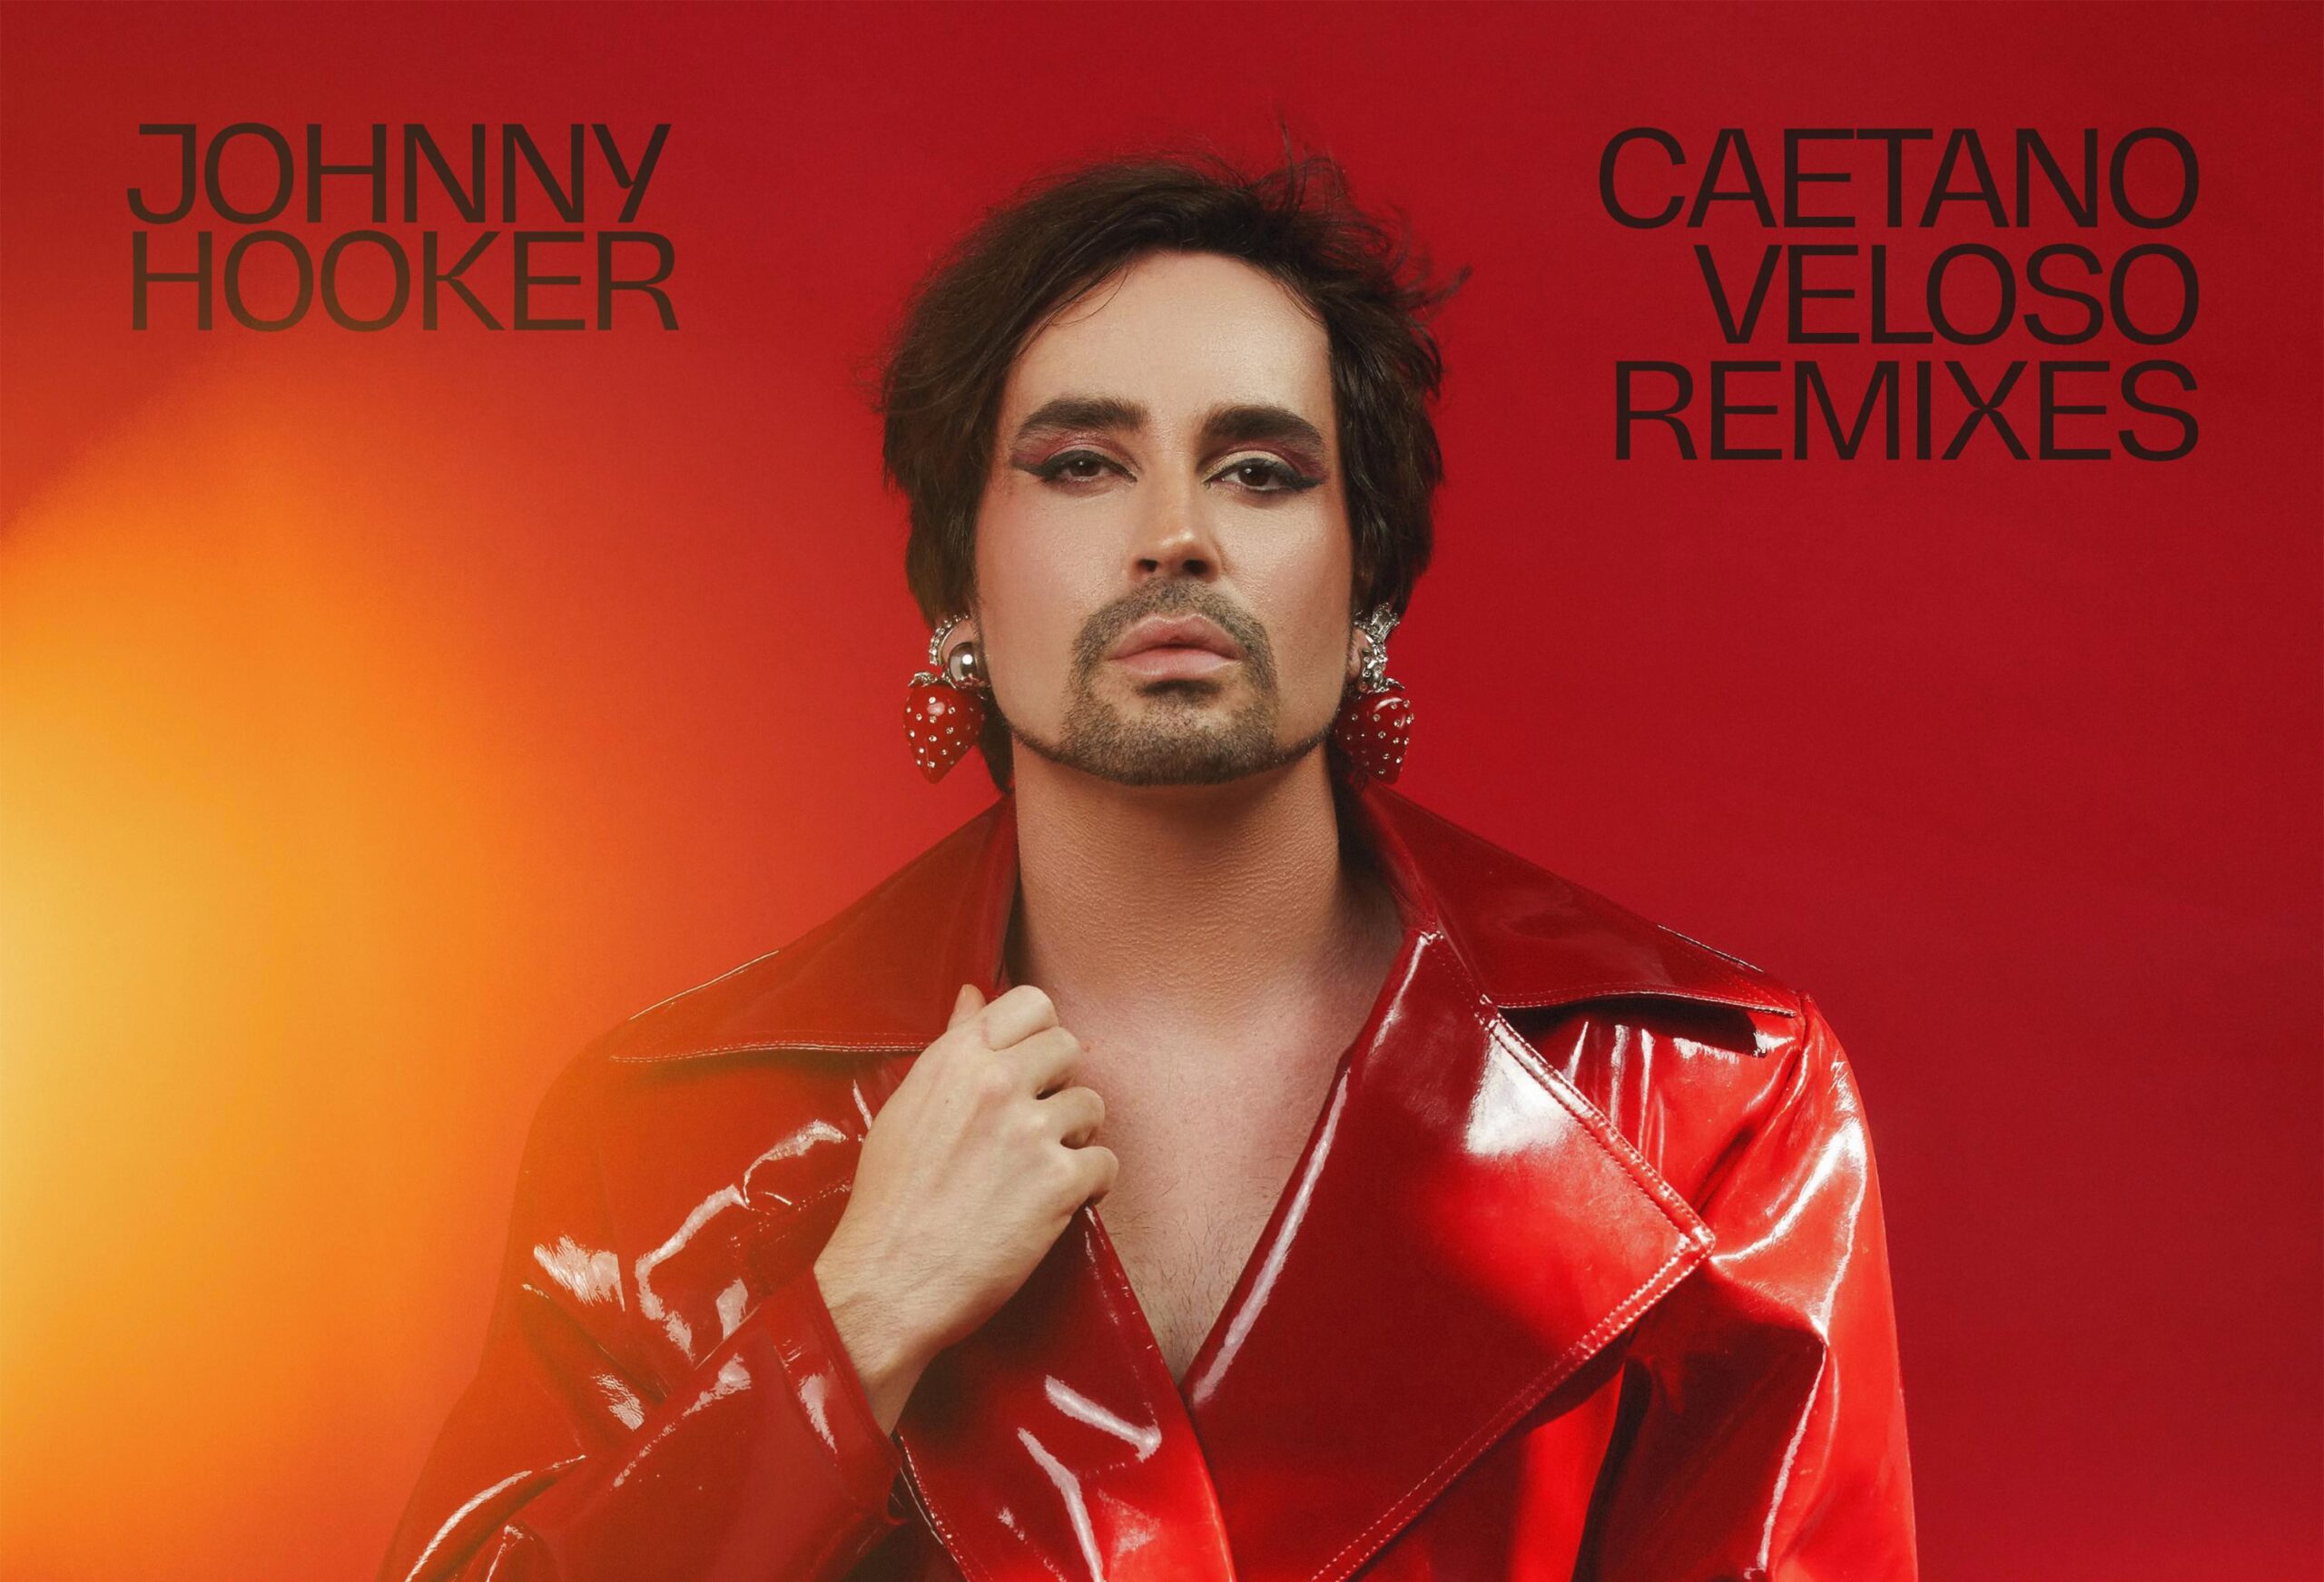  Johnny Hooker se prepara para turnê especial de 20 anos de carreira e lança de EP de remixes